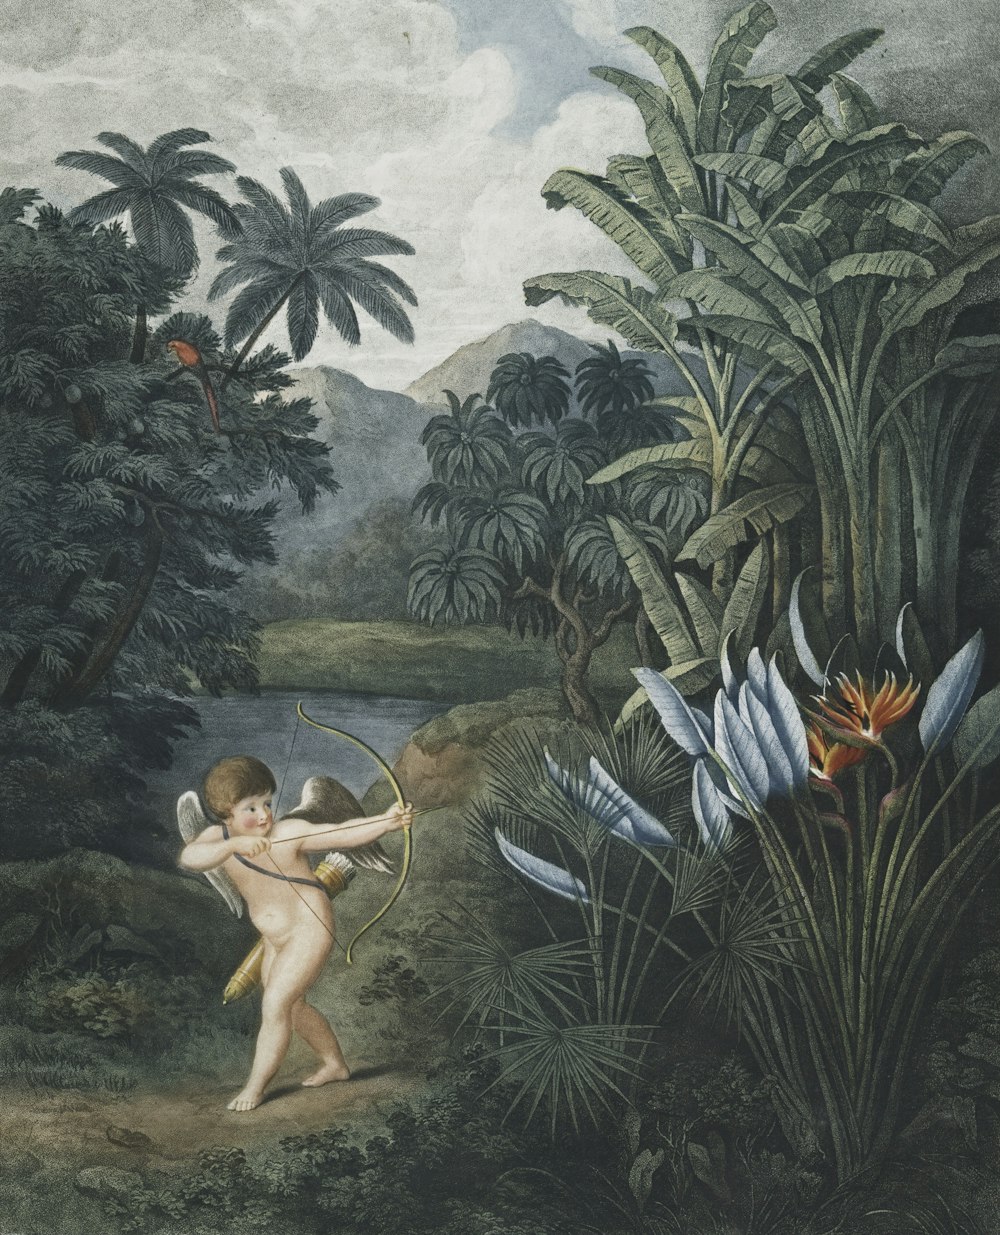 cherub holding bow and arrow near orange petaled flower painting